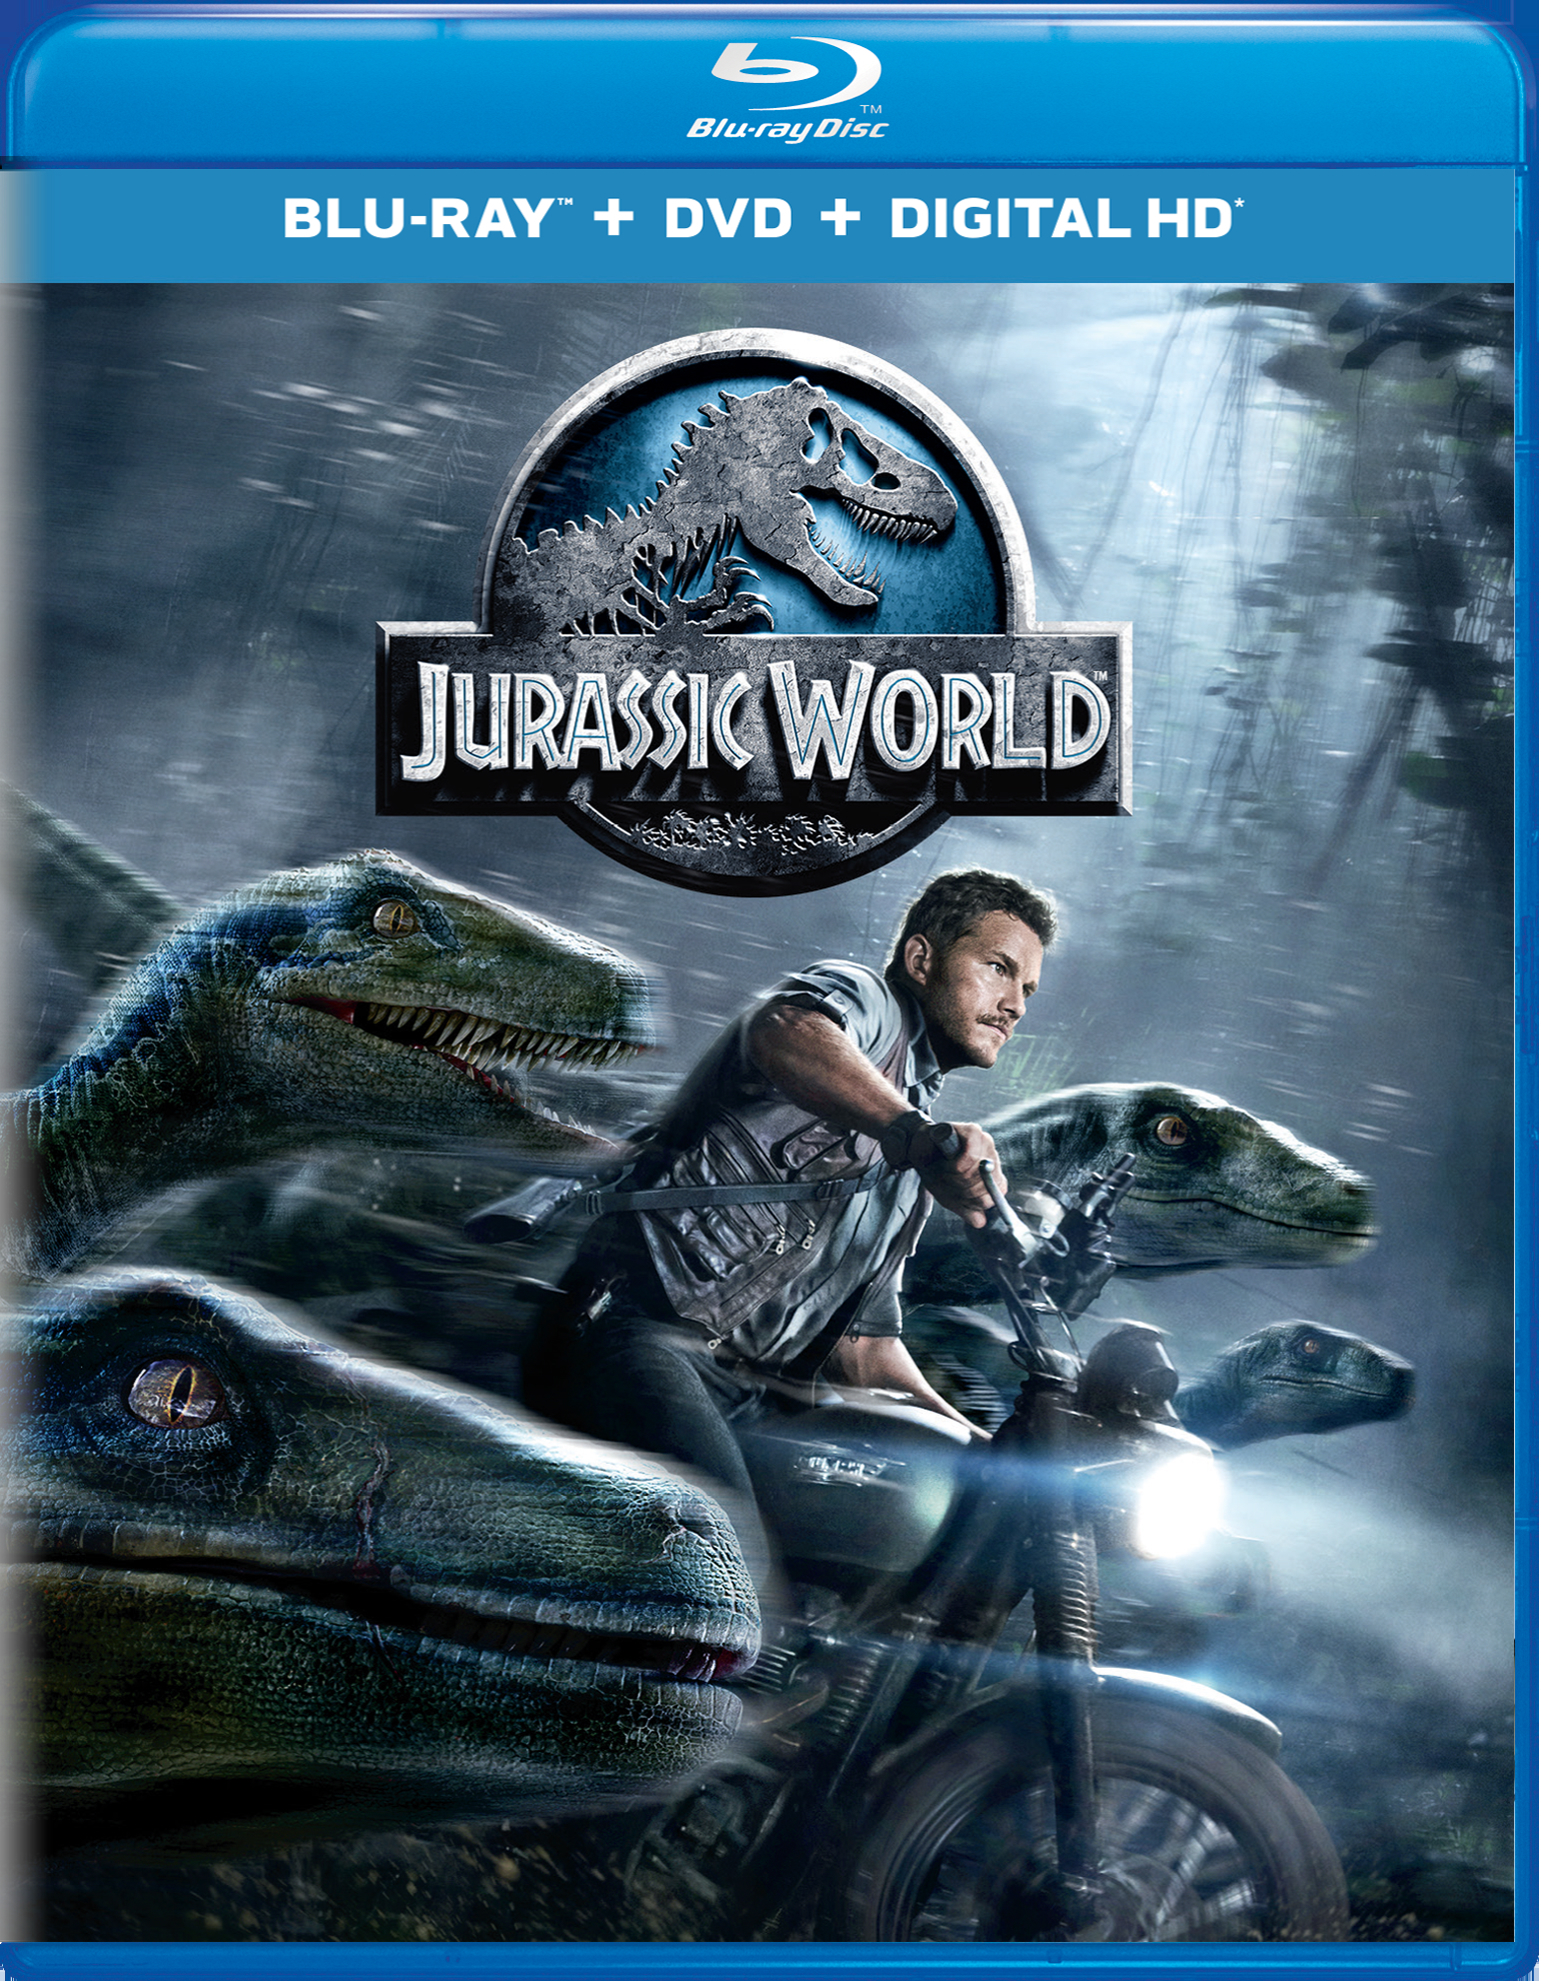 Jurassic World (DVD + Digital) - Blu-ray [ 2015 ]  - Adventure Movies On Blu-ray - Movies On GRUV